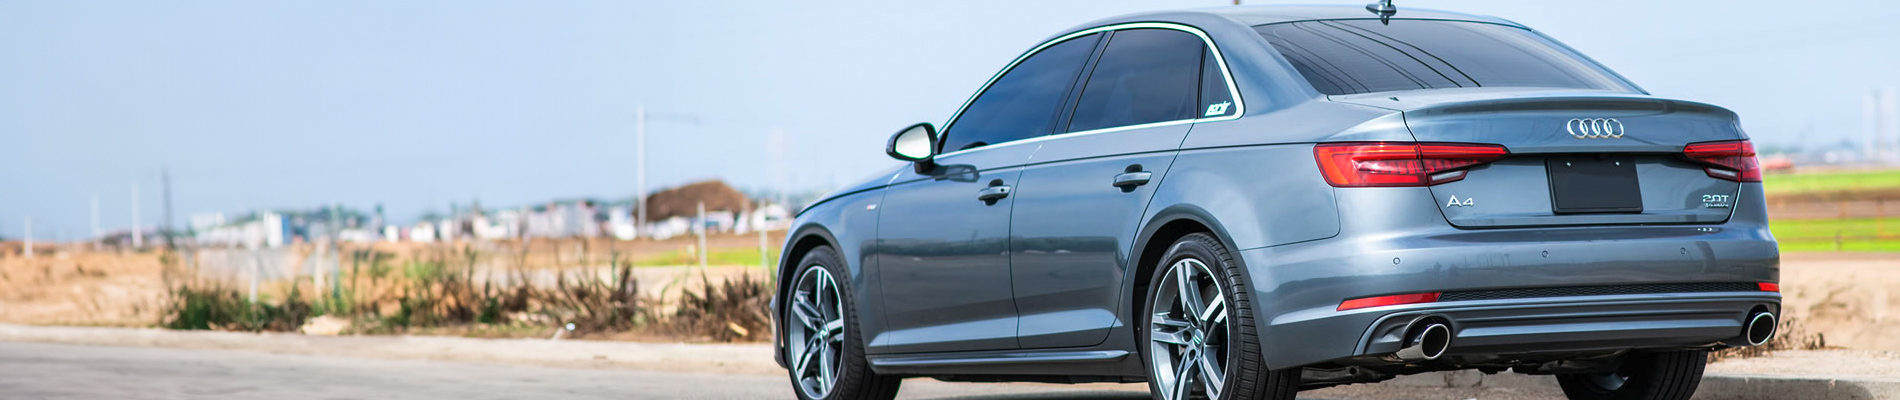 Audi A4 Accessories, Aftermarket Parts, Mods & Upgrades - AutoAccessoriesGarage.com